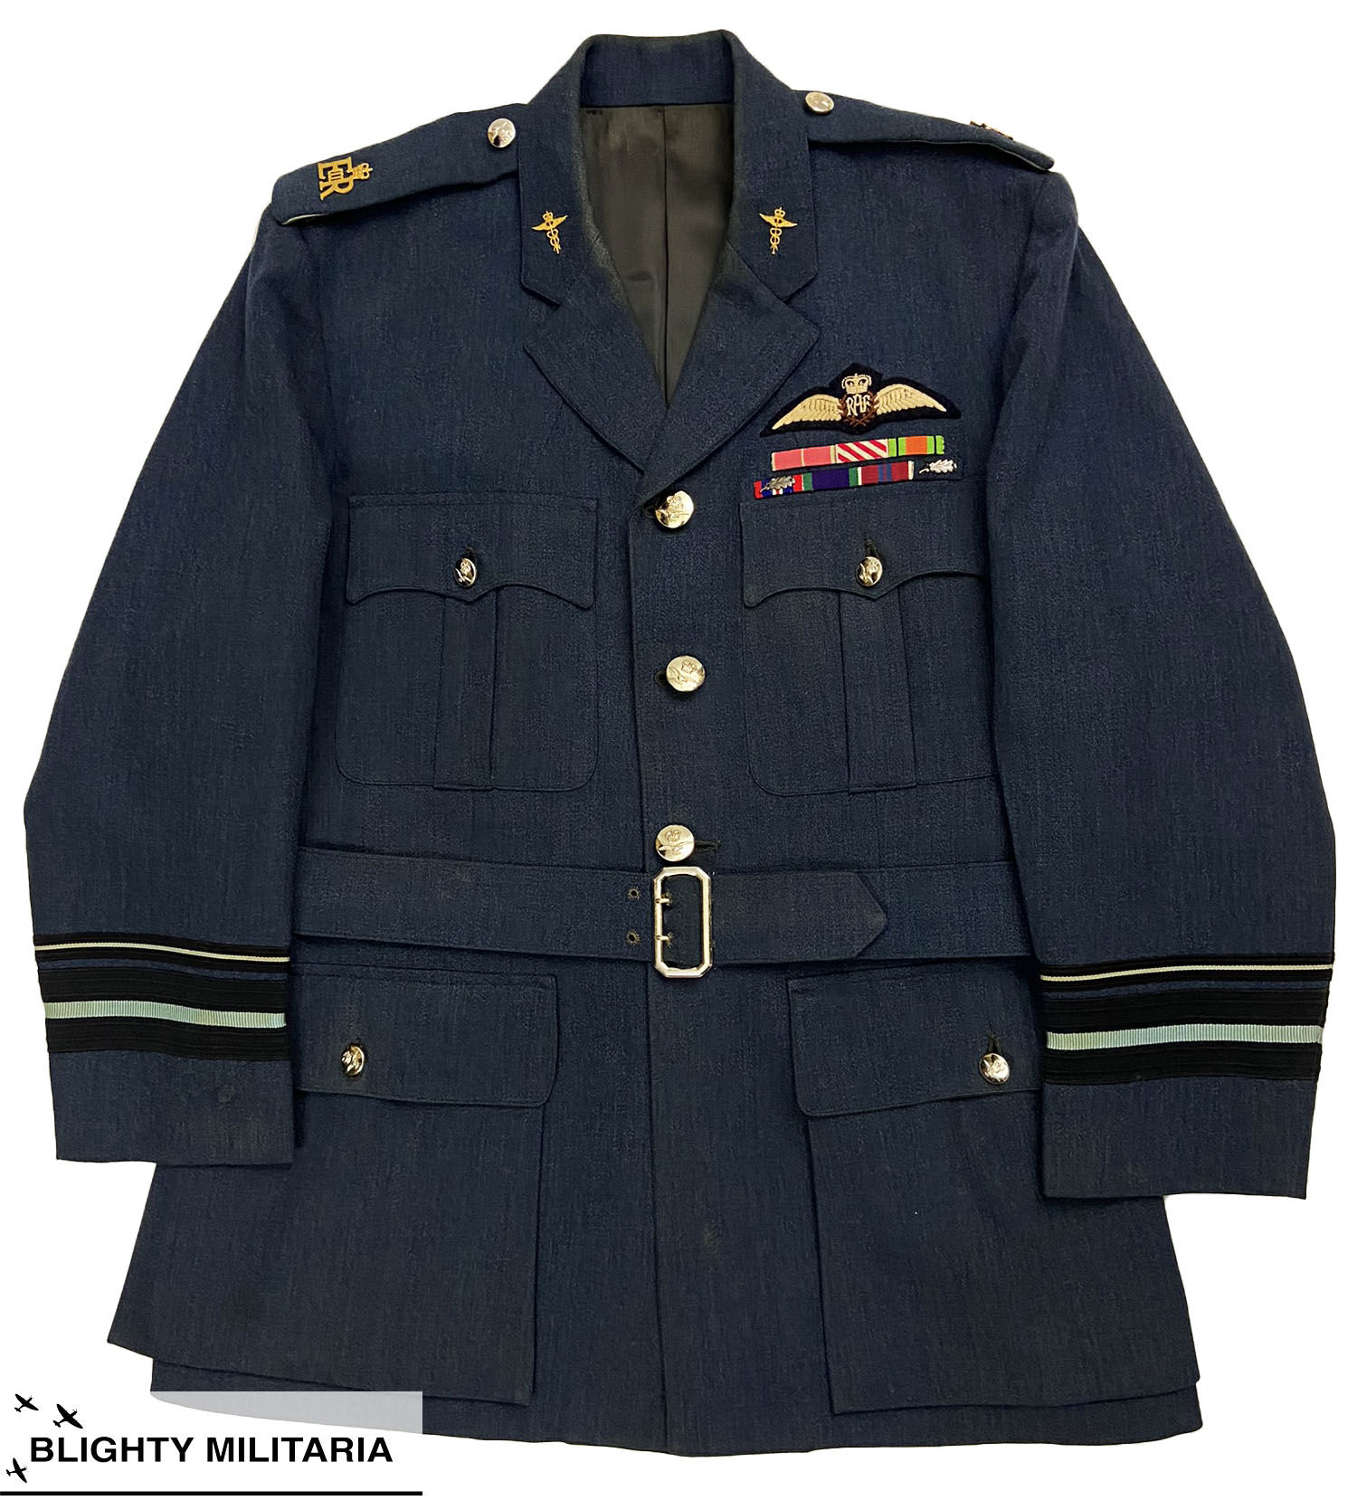 Original 1950s RAF Air Vice Marshall's Service Dress Tunic